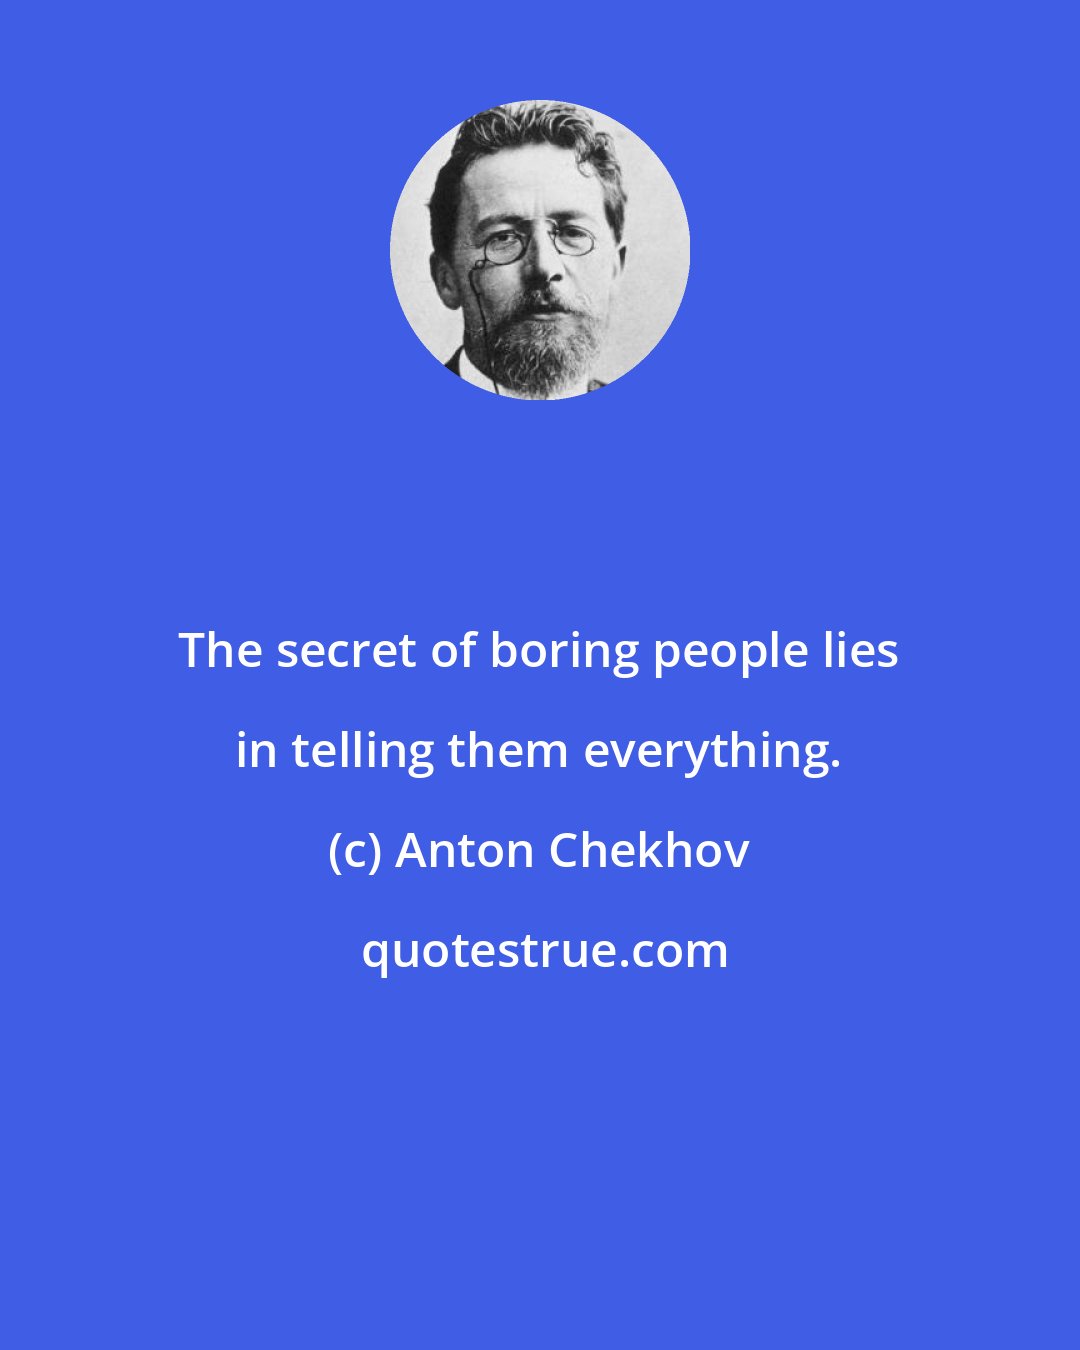 Anton Chekhov: The secret of boring people lies in telling them everything.